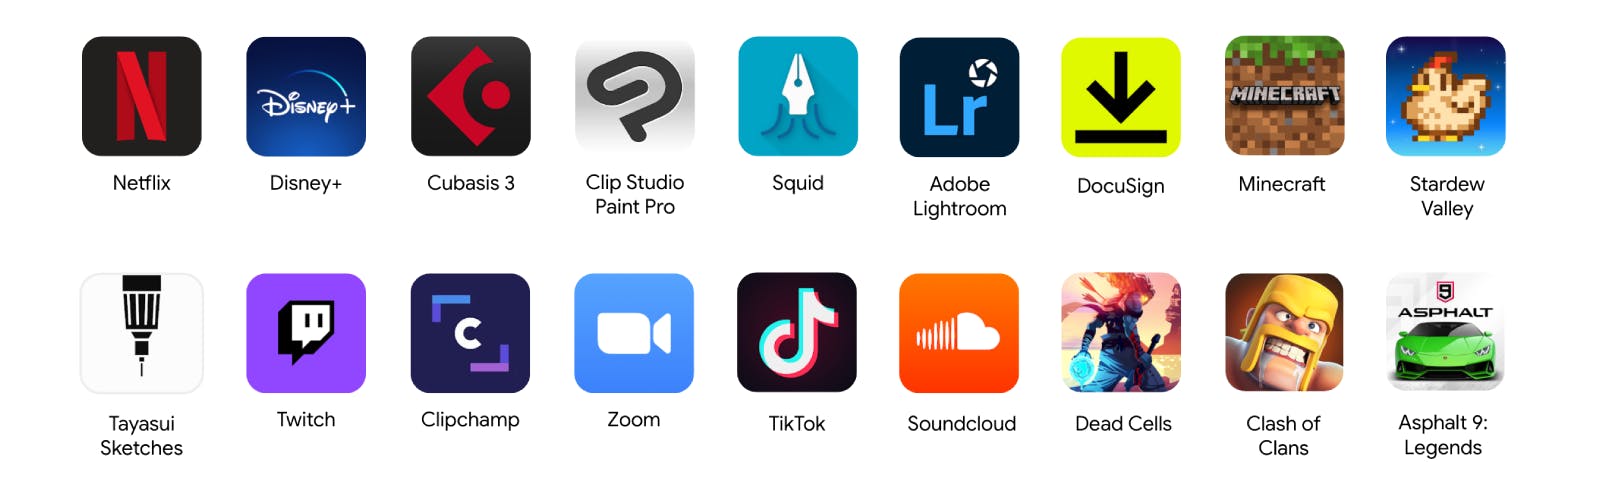 Logos of apps that adapted for ChromeOS: Netflix, Disney+, Cubasis 3, Clip Studio Paint Pro, Squid, Adobe Lightroom, DocuSign, Minecraft, Stardew Valley, Tayasui Sketches, Twitch, Clipchamp, Zoom, TikTok, Soundcloud, Dead Cells, Clash of Clans, Asphalt 9: Legends